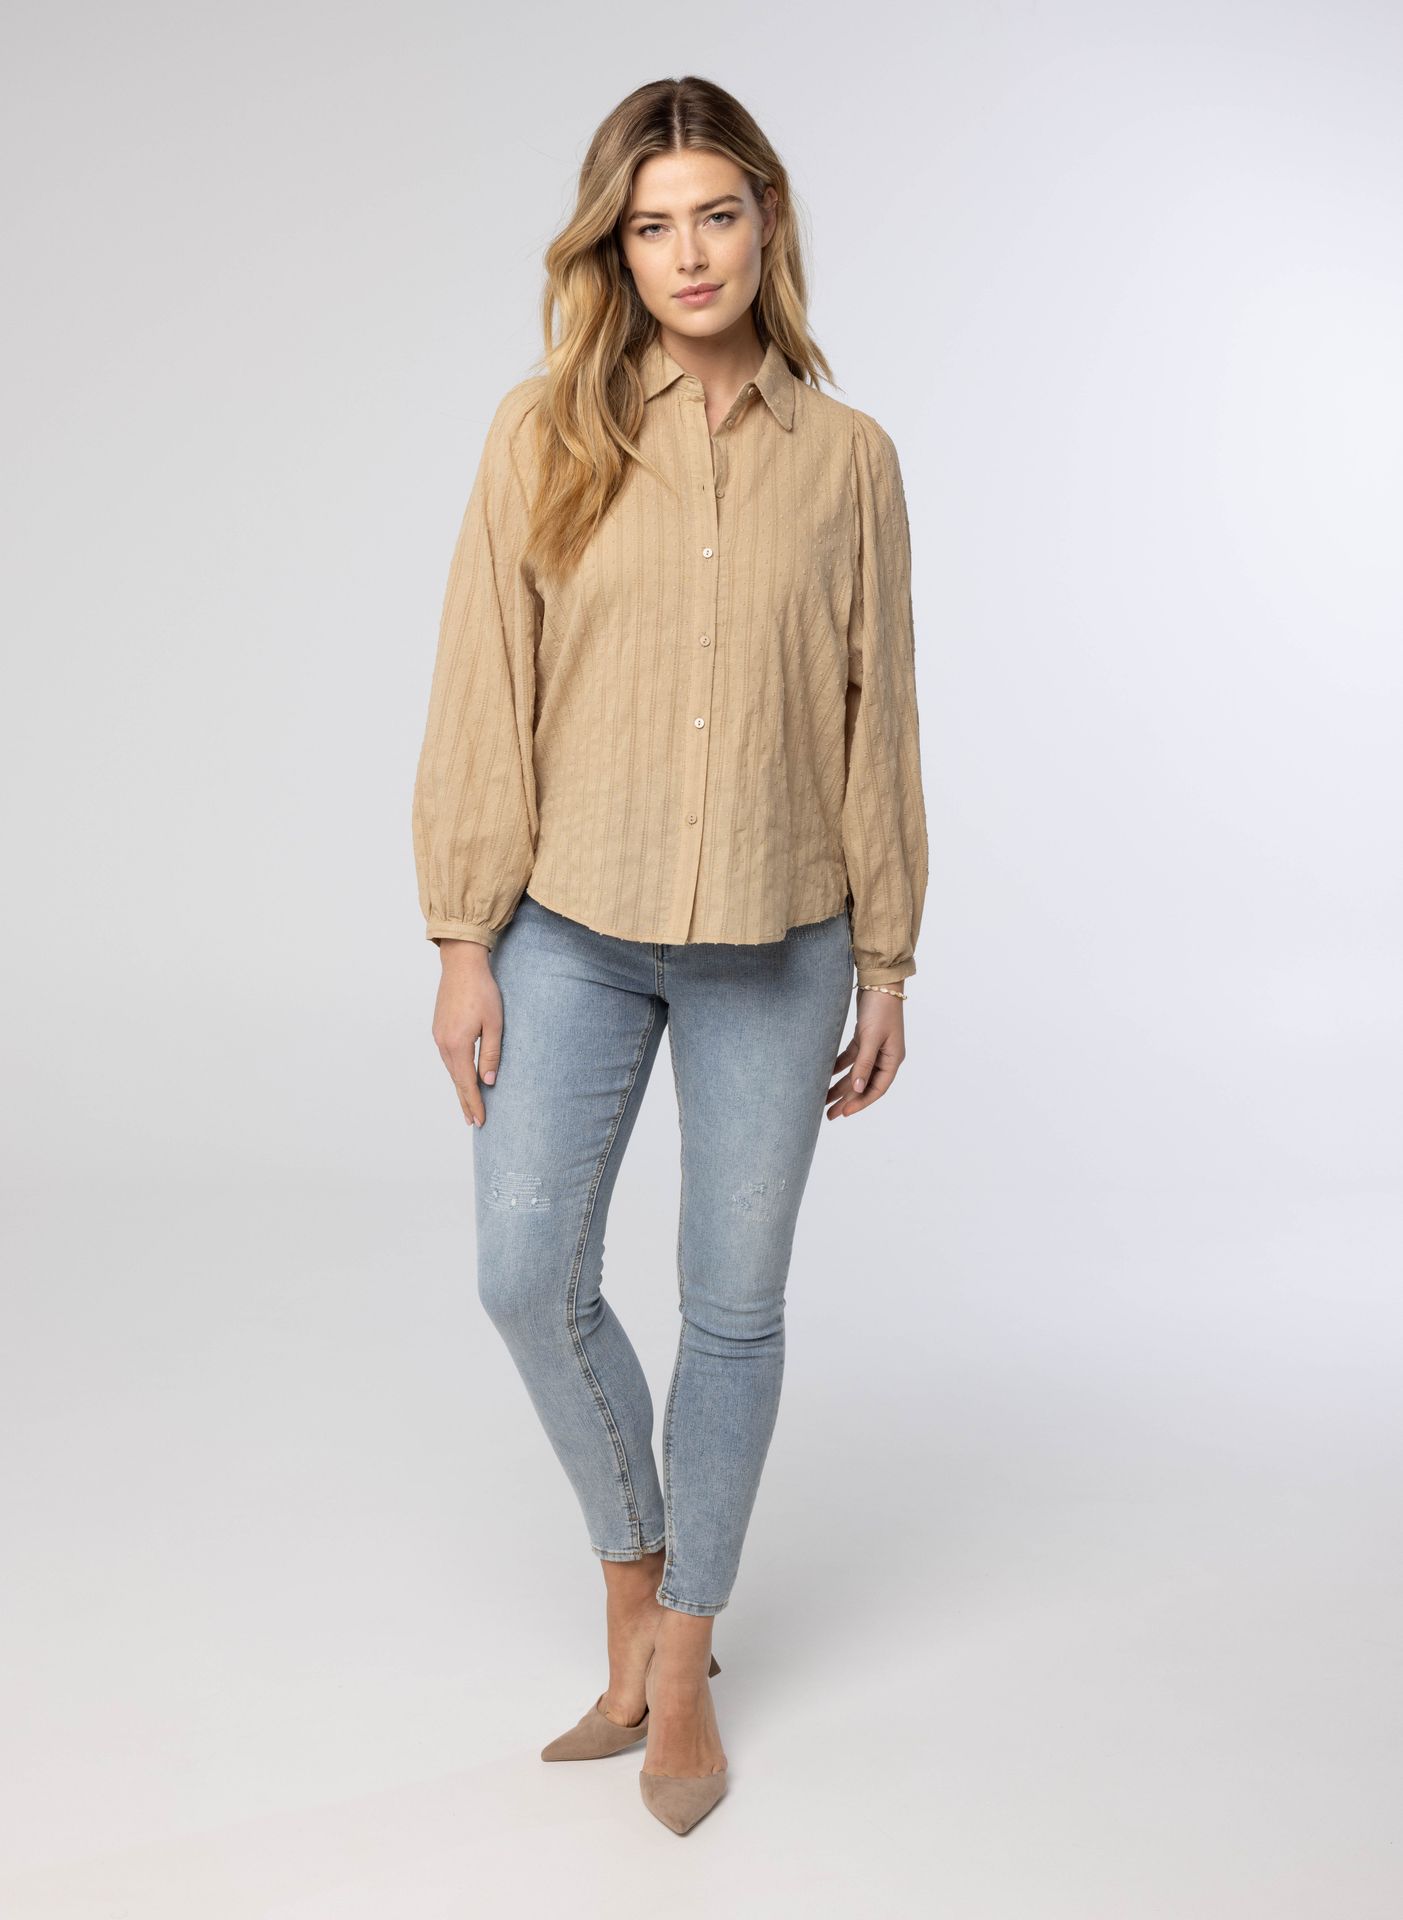 Norah Zandkleurige blouse  sand 214306-110